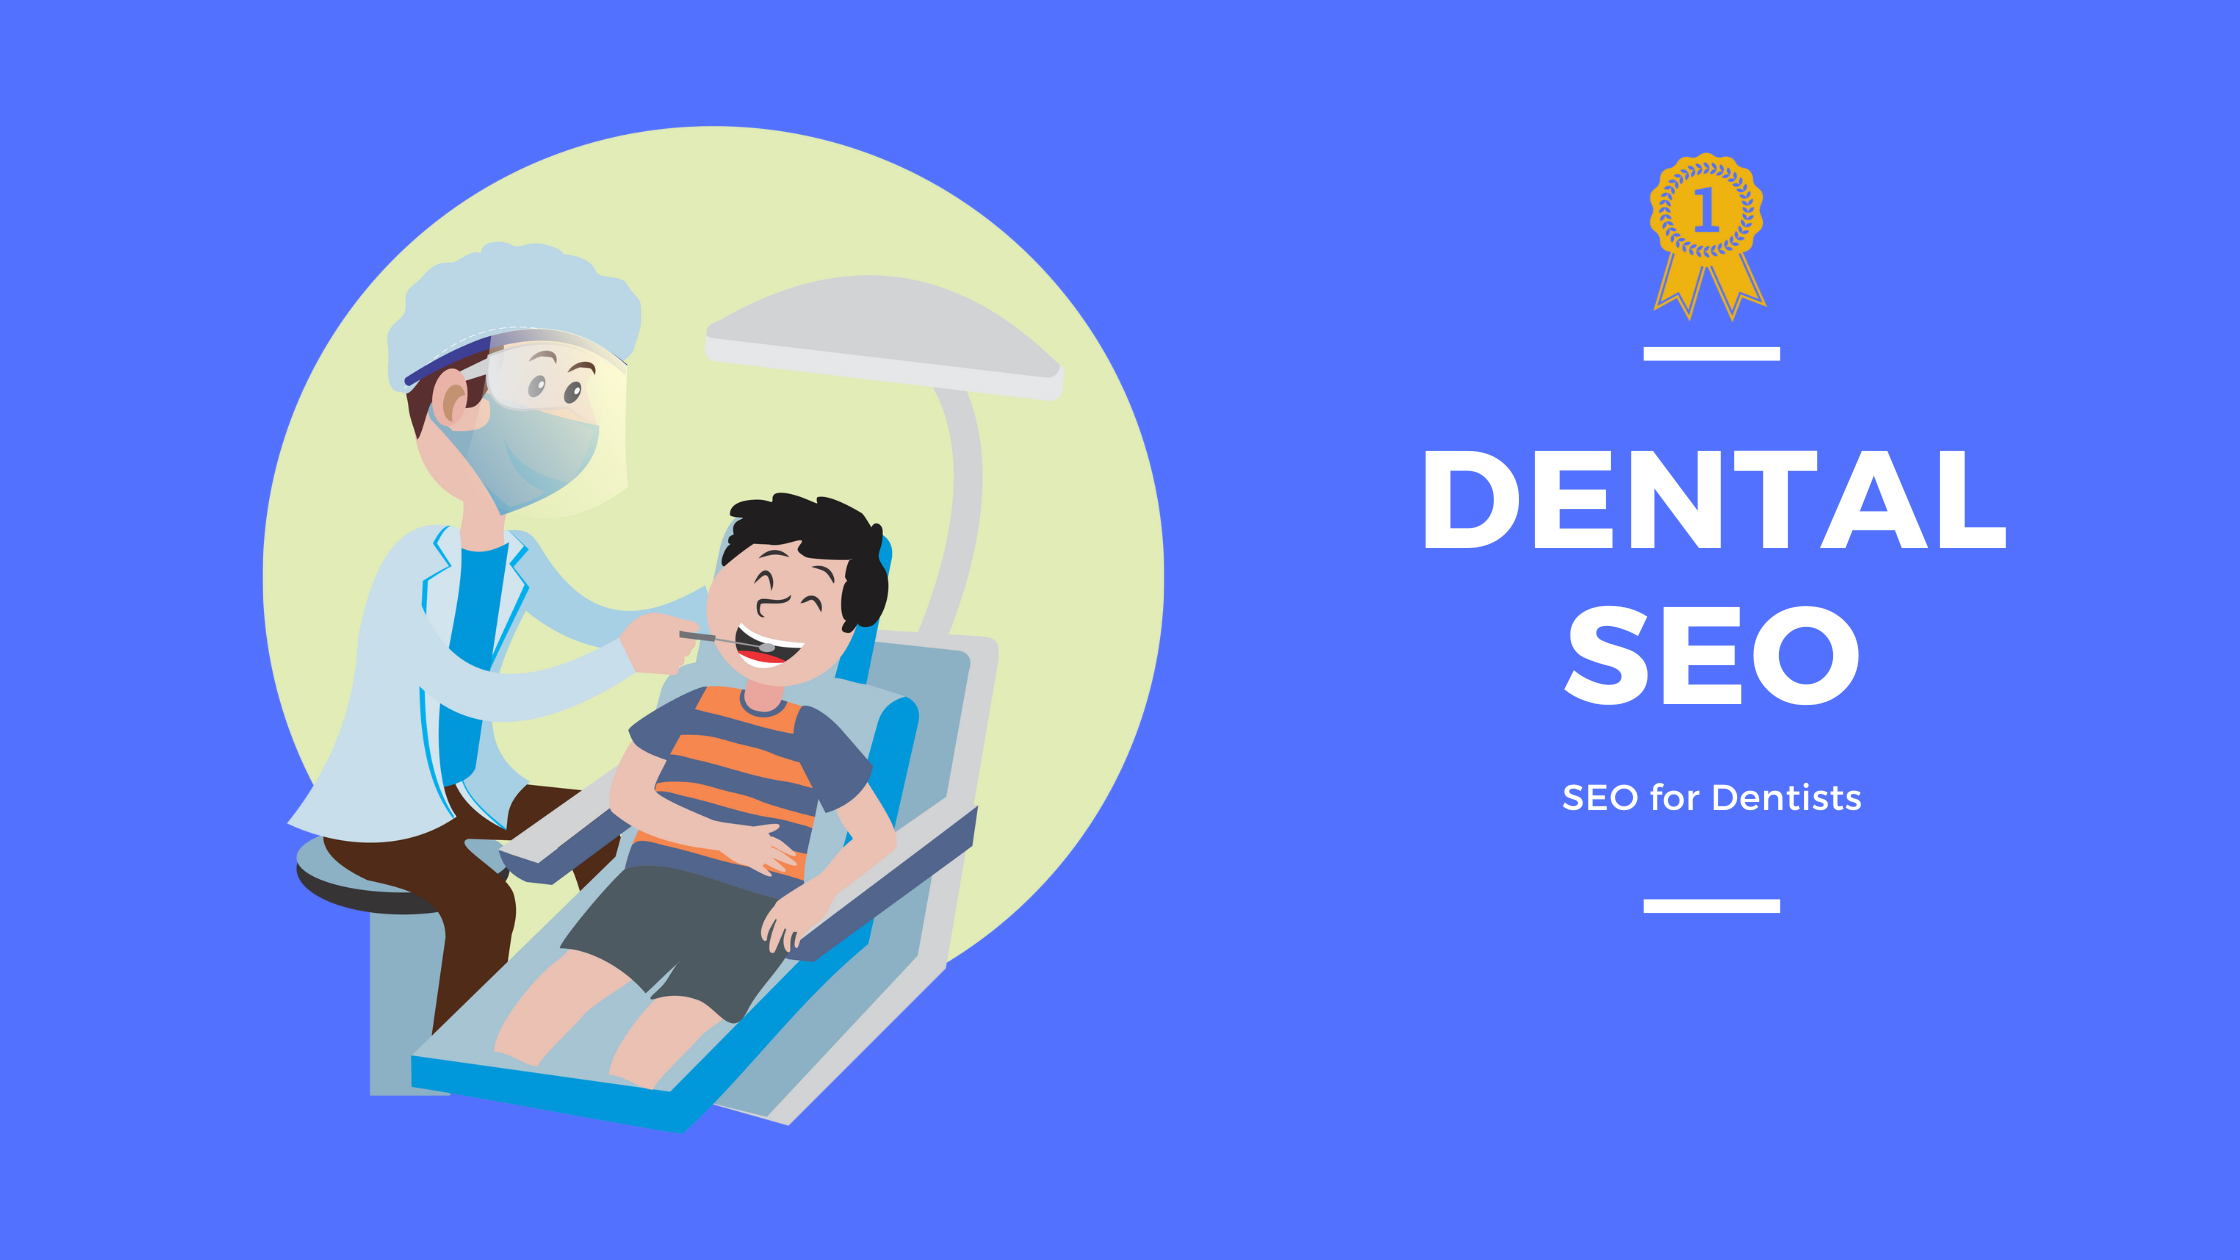 Dental seo for dentists